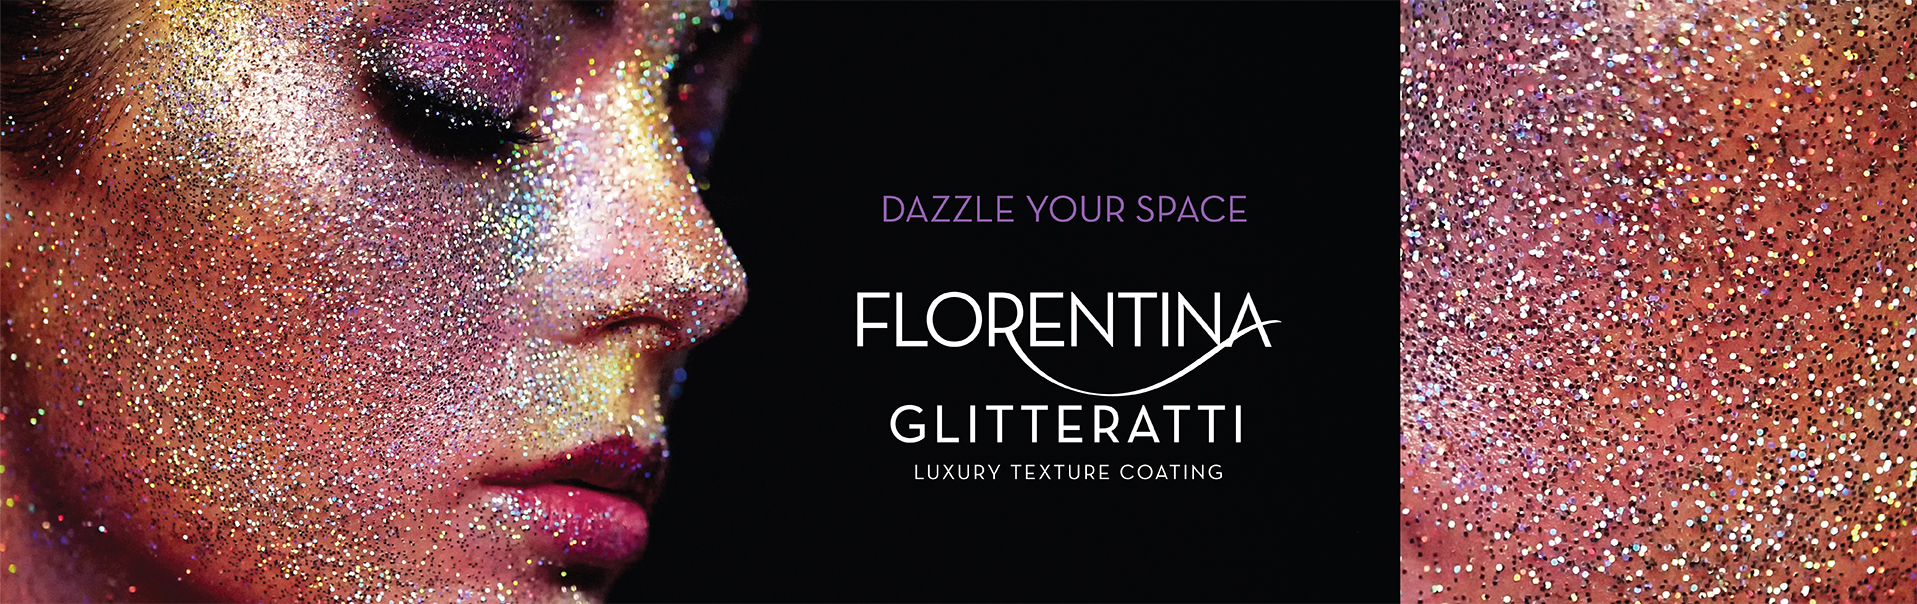 Florentina Glitteratti Banner